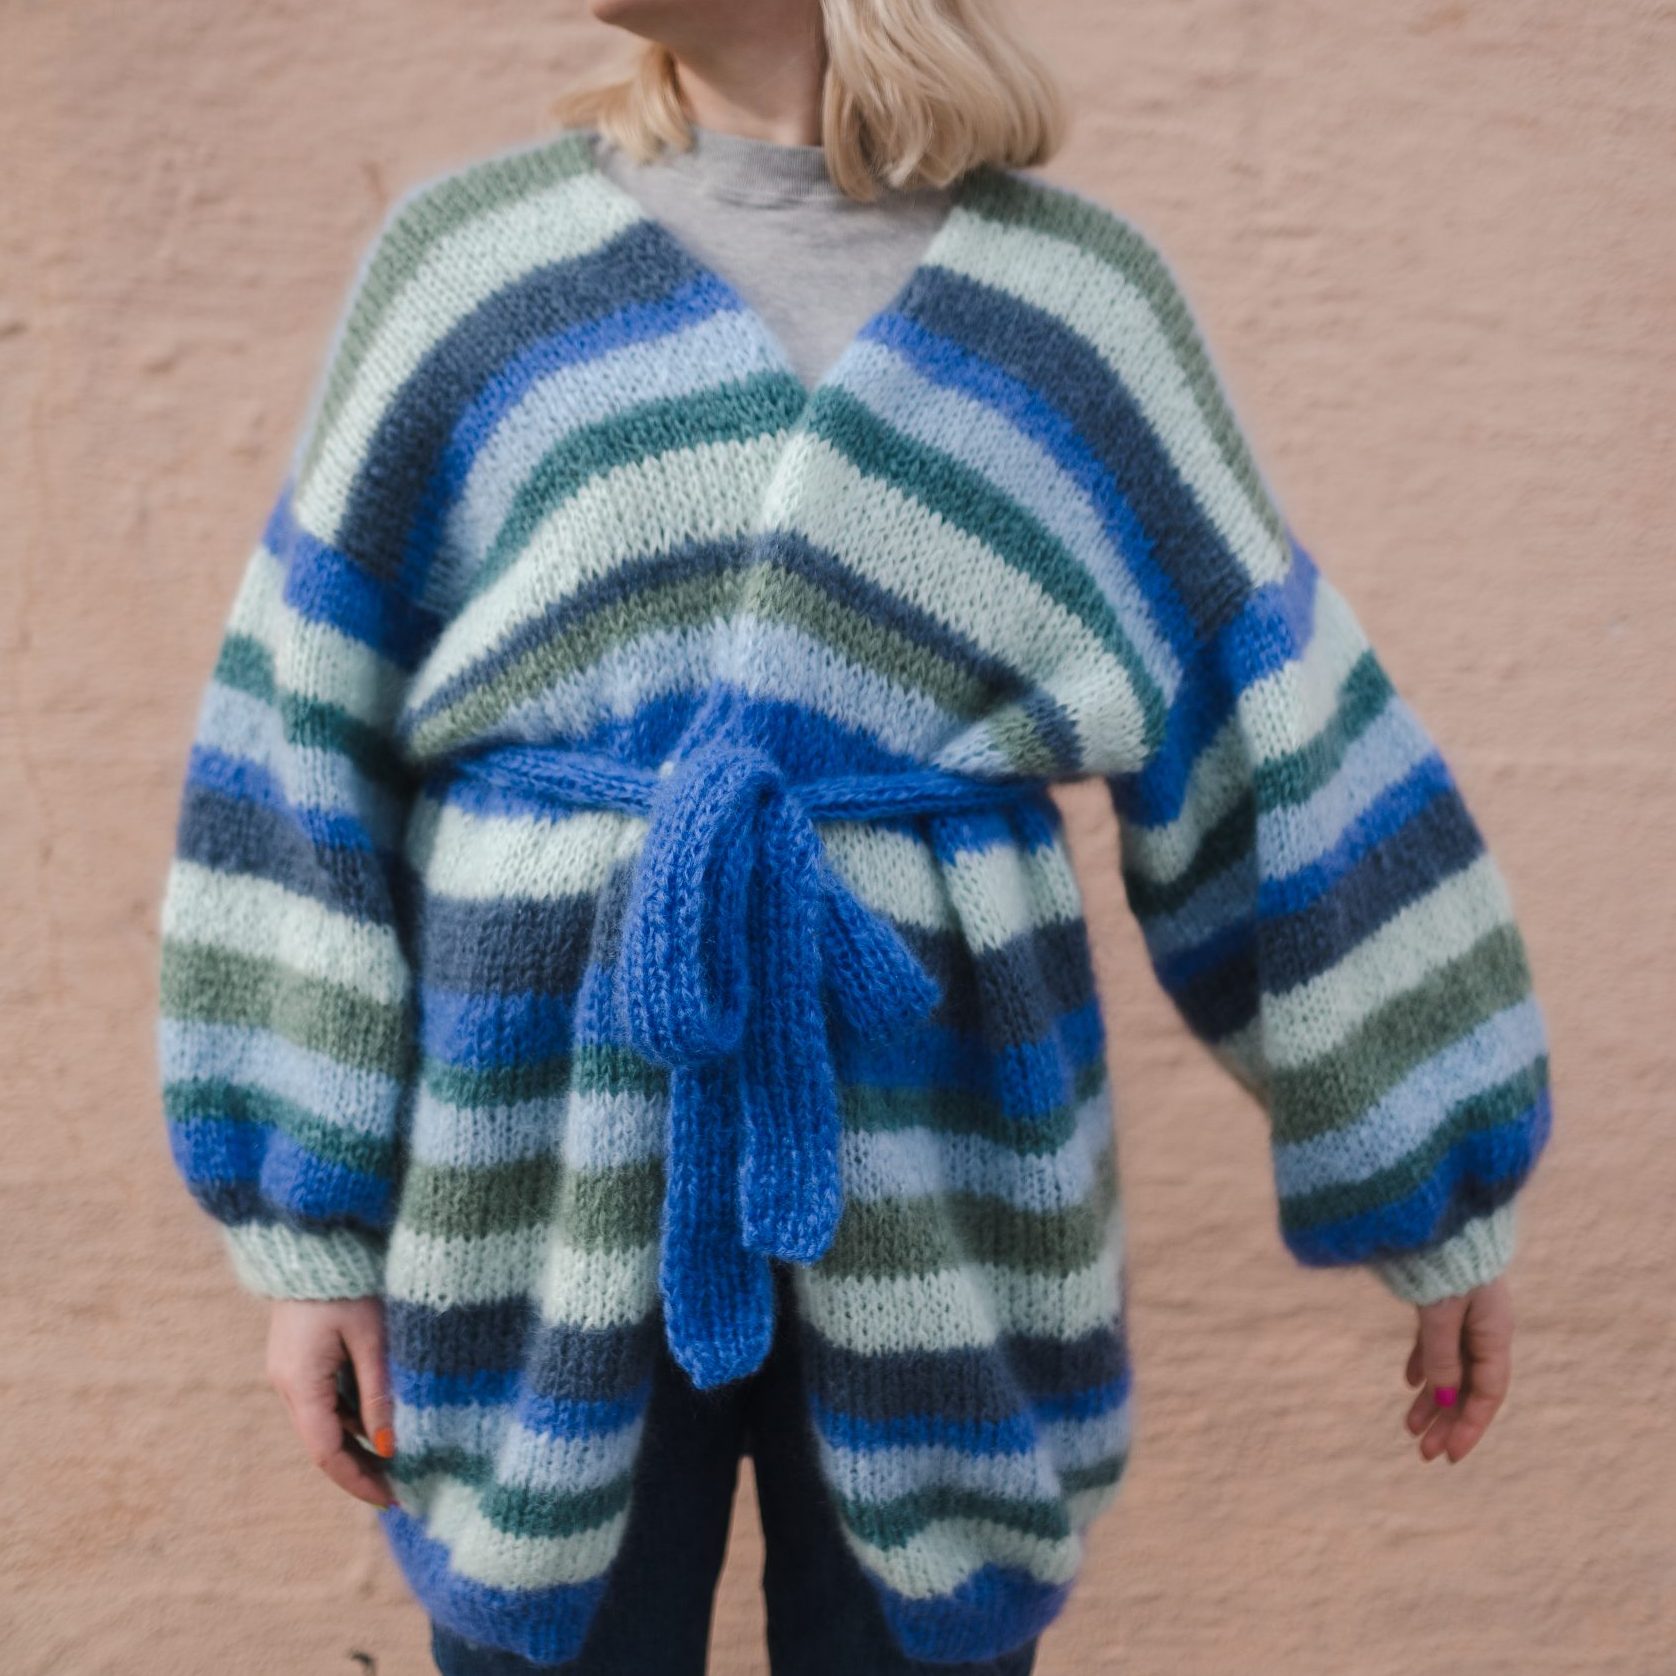  - Paradise jacket Fluff | Knitted jacket stripes | Knitting kit - by HipKnitShop - 04/08/2022